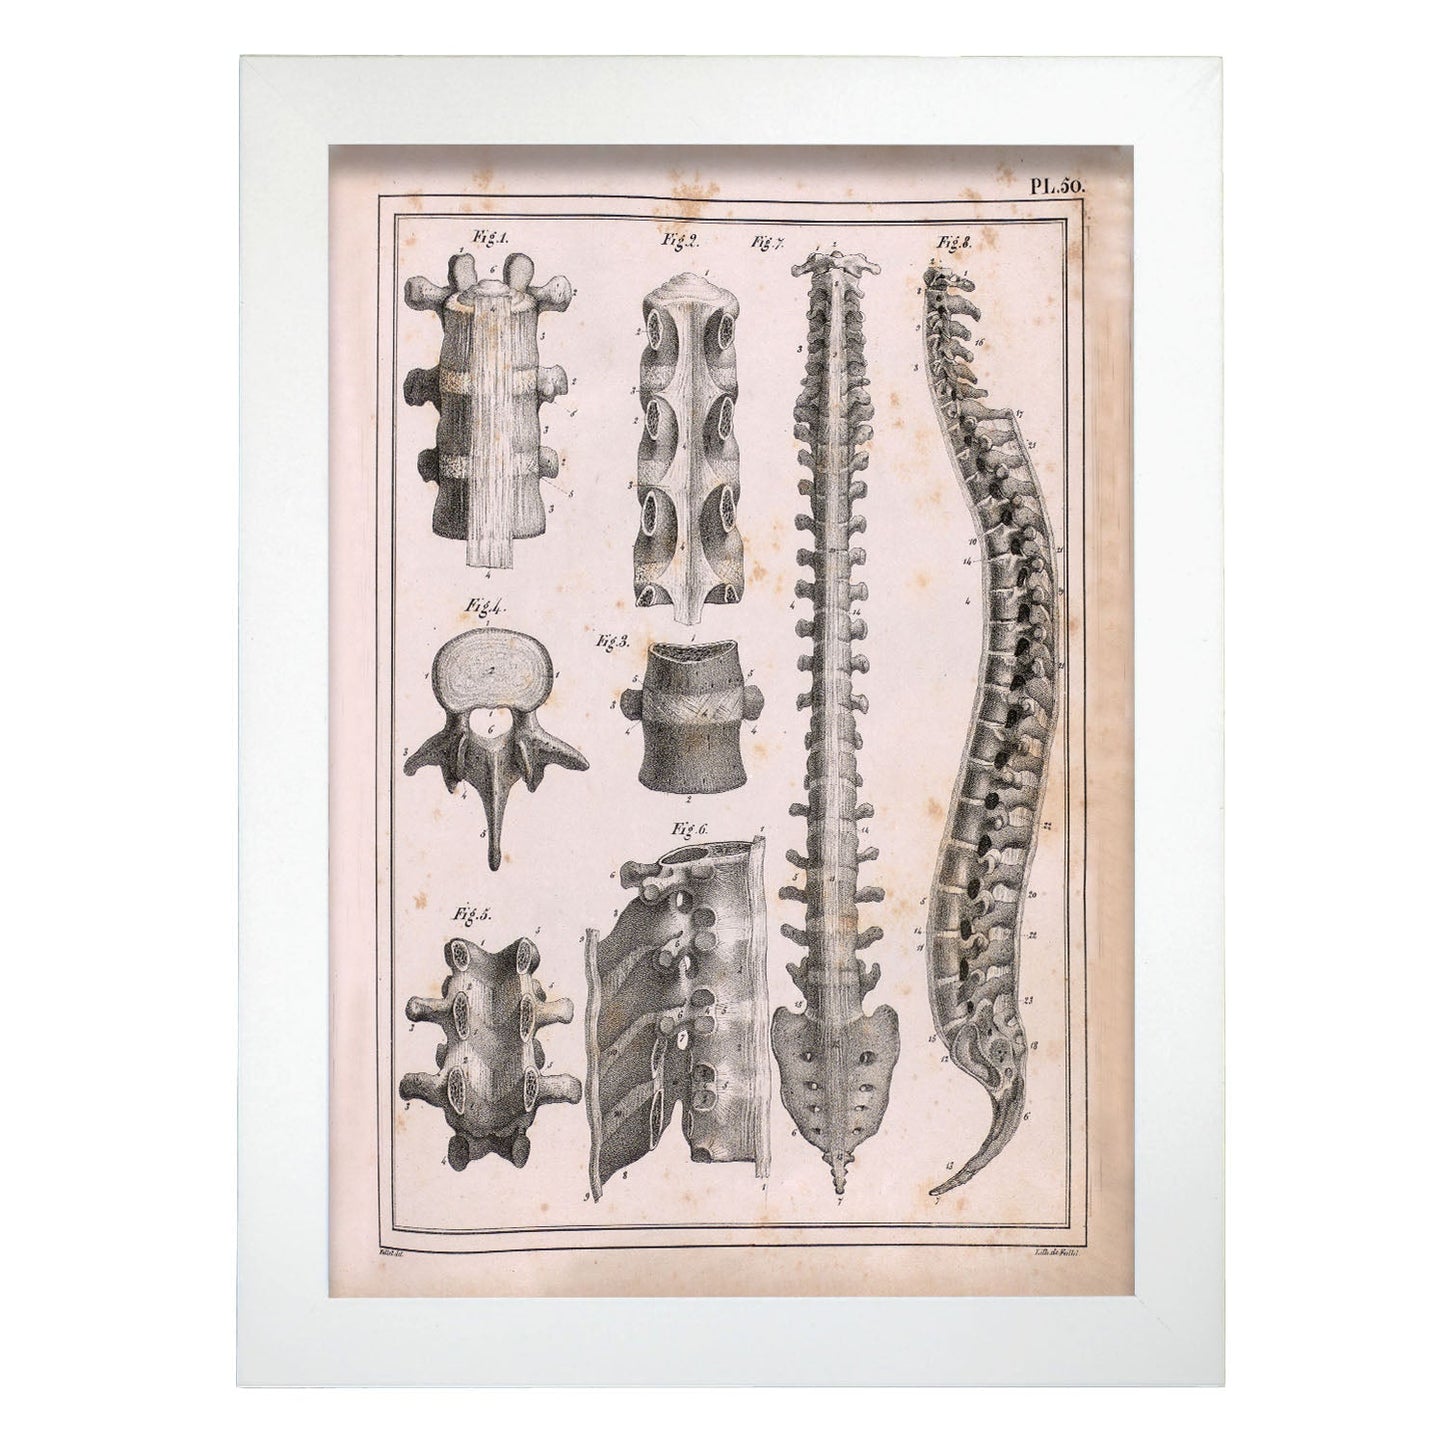 Paillou Spine; vertebrae, sacrum and coccyx with ligaments-Artwork-Nacnic-A4-Marco Blanco-Nacnic Estudio SL